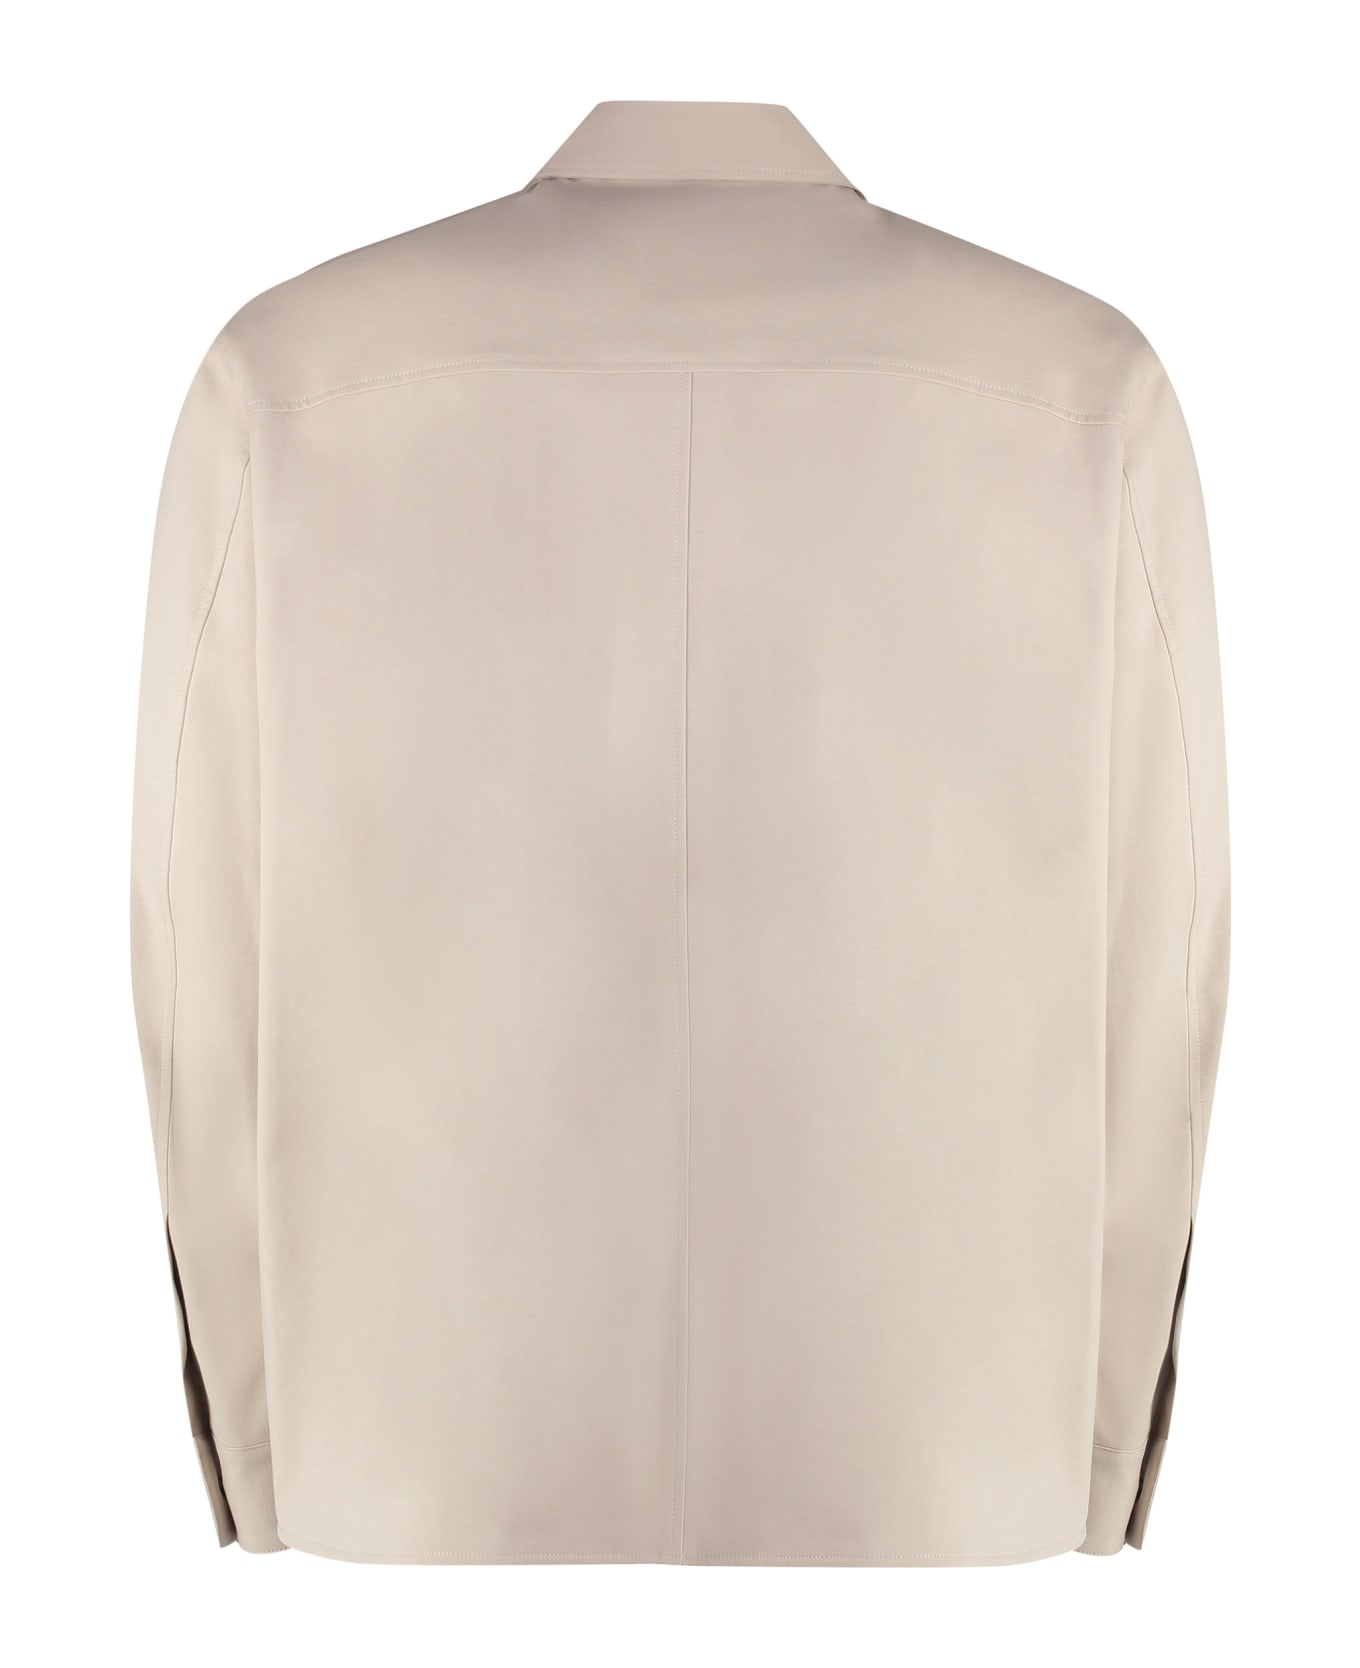 Dolce gabana & Gabbana Technical Fabric Overshirt - Beige